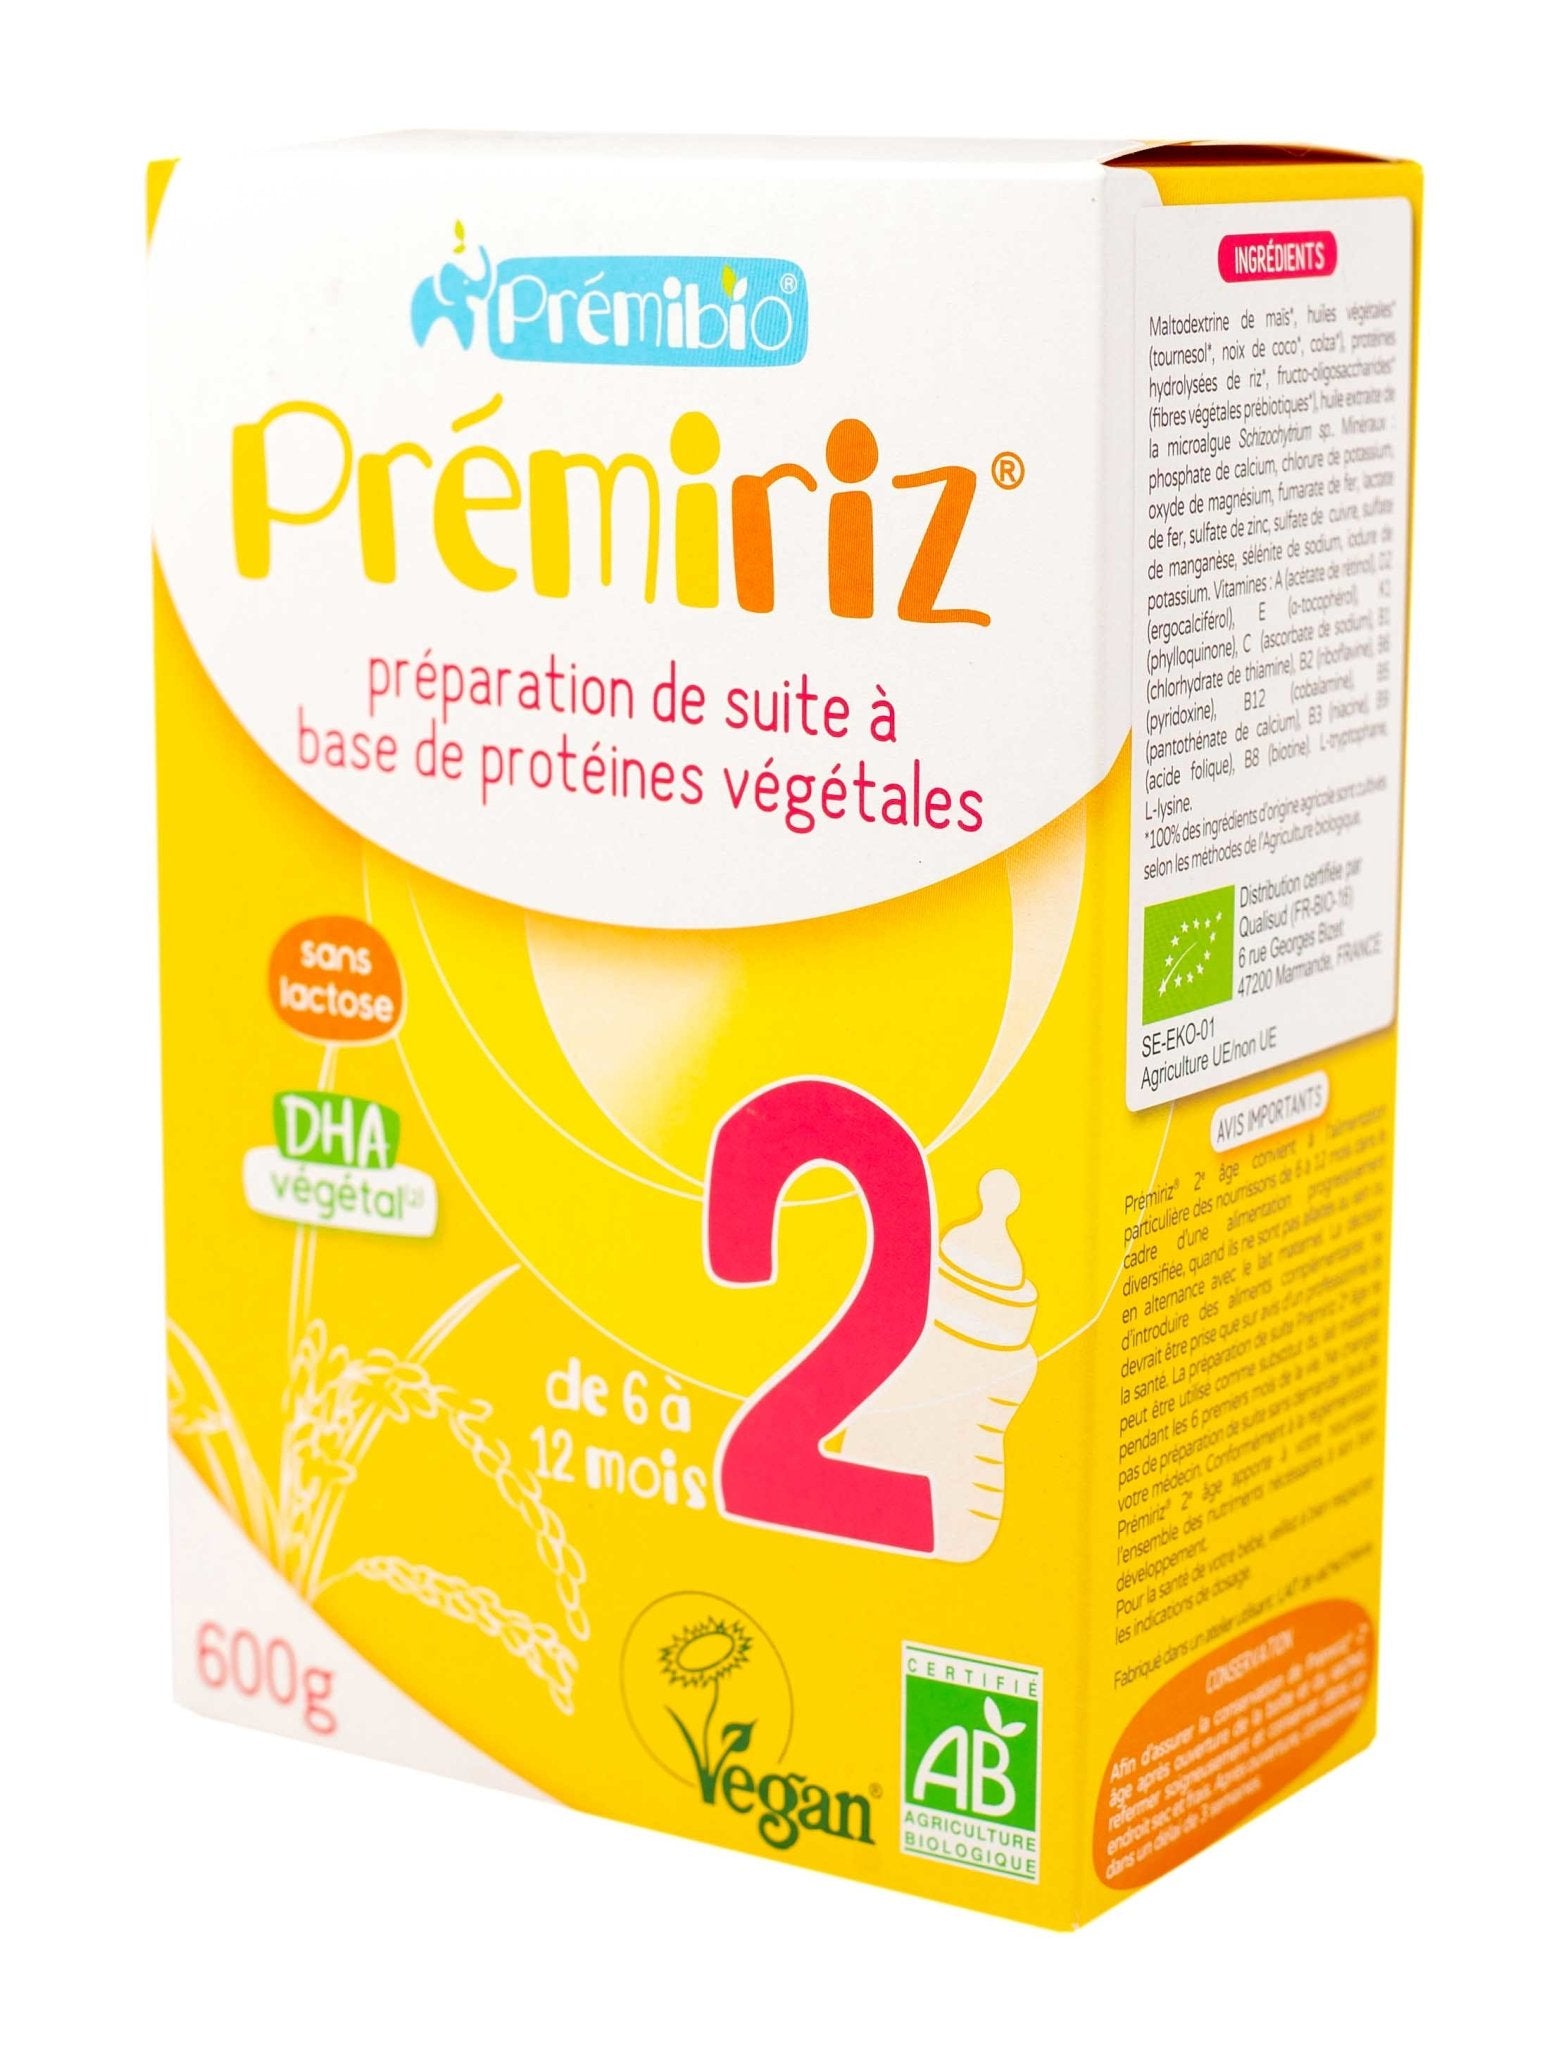 Premibio Organic Vegan Stage 2 (600g) Baby Formula - The Milky Box